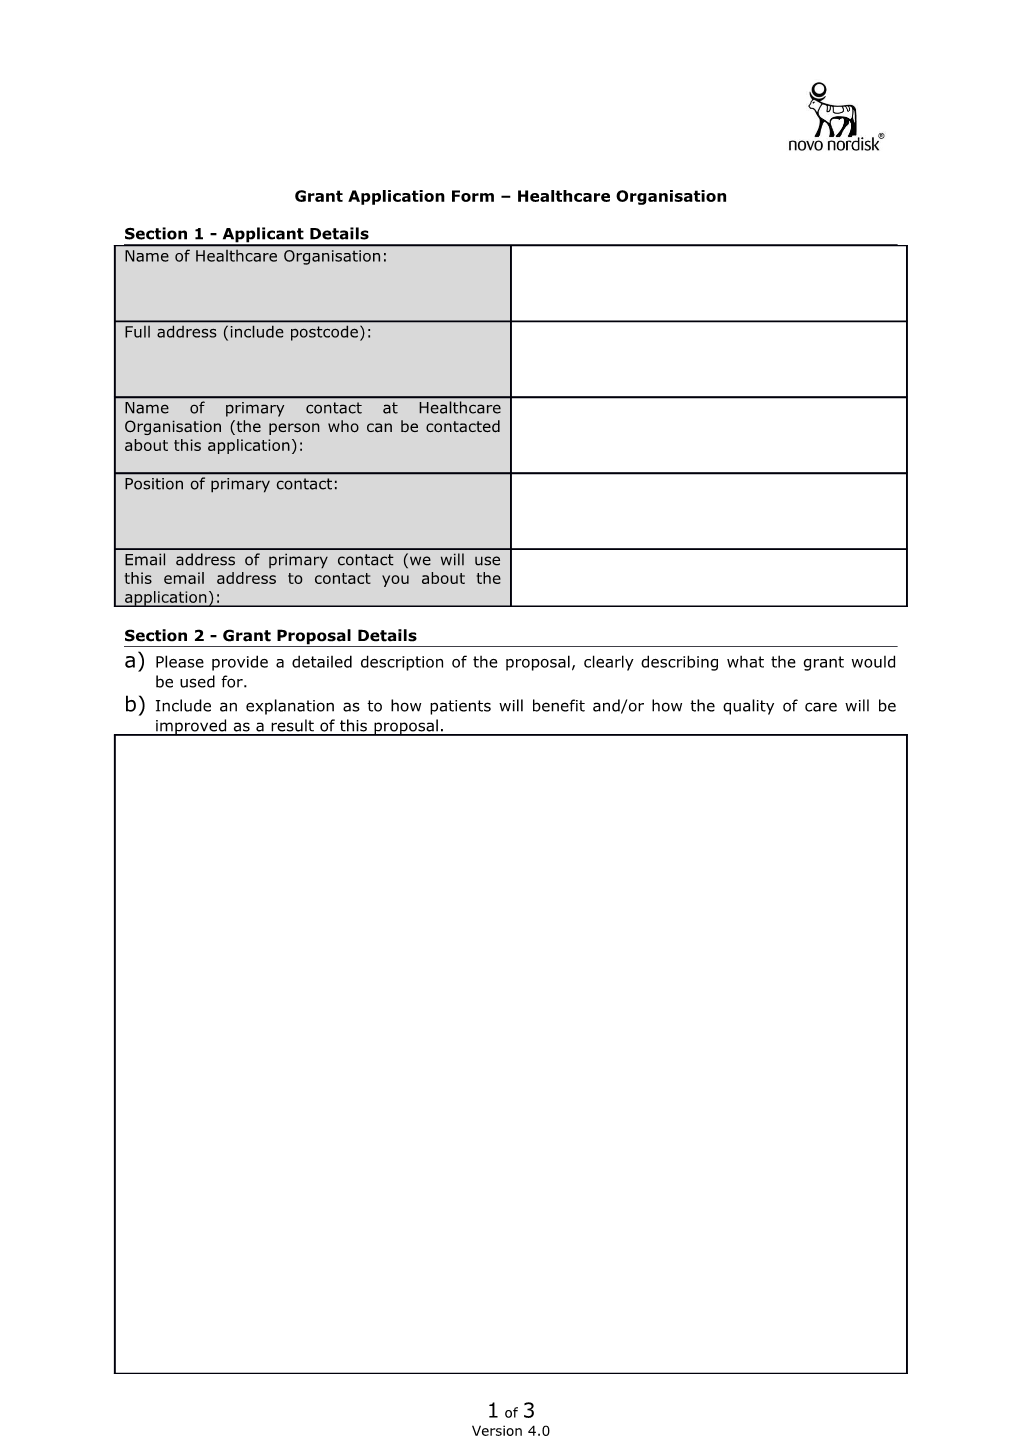 Grant Application Form Healthcare Organisation